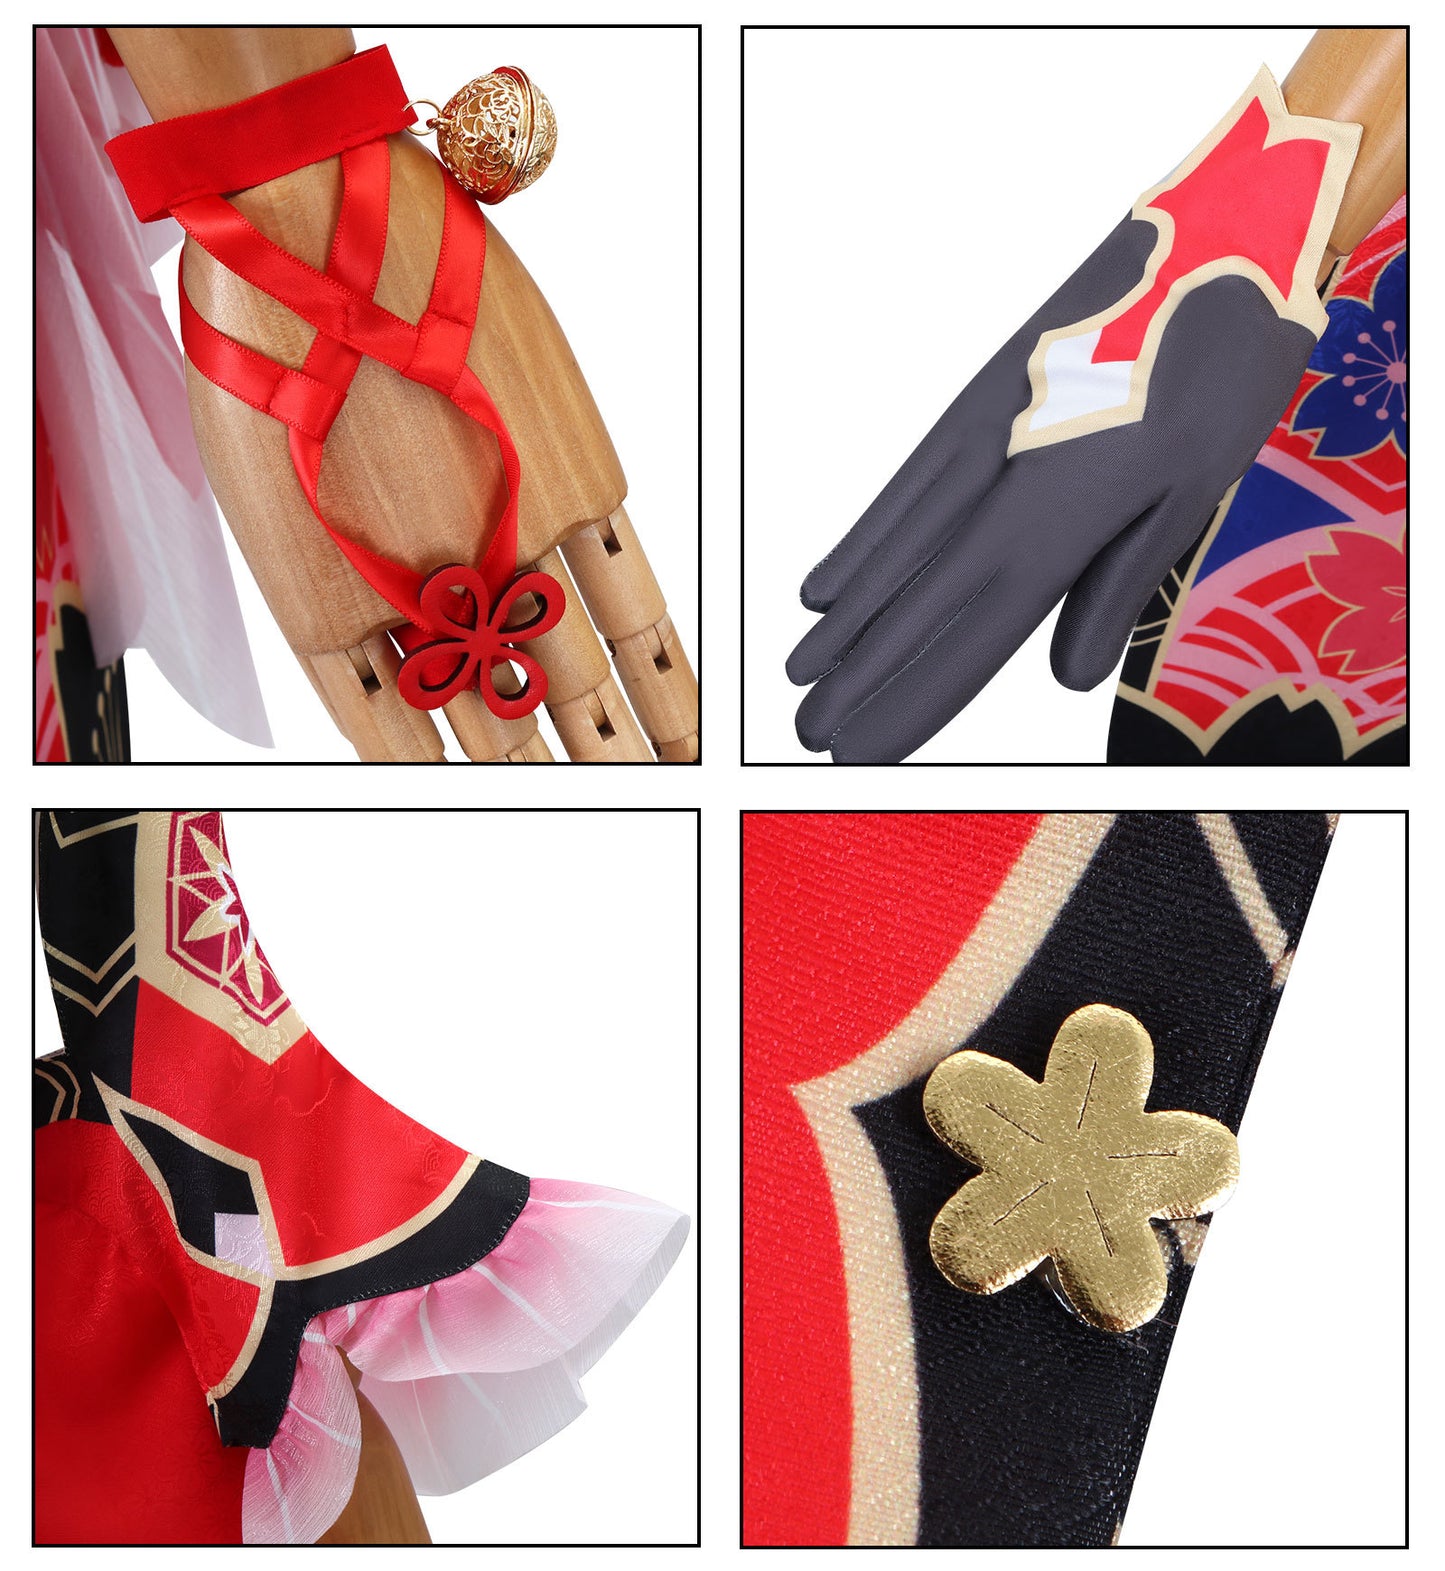 Honkai: Star Rail Sparkle Cosplay Costume